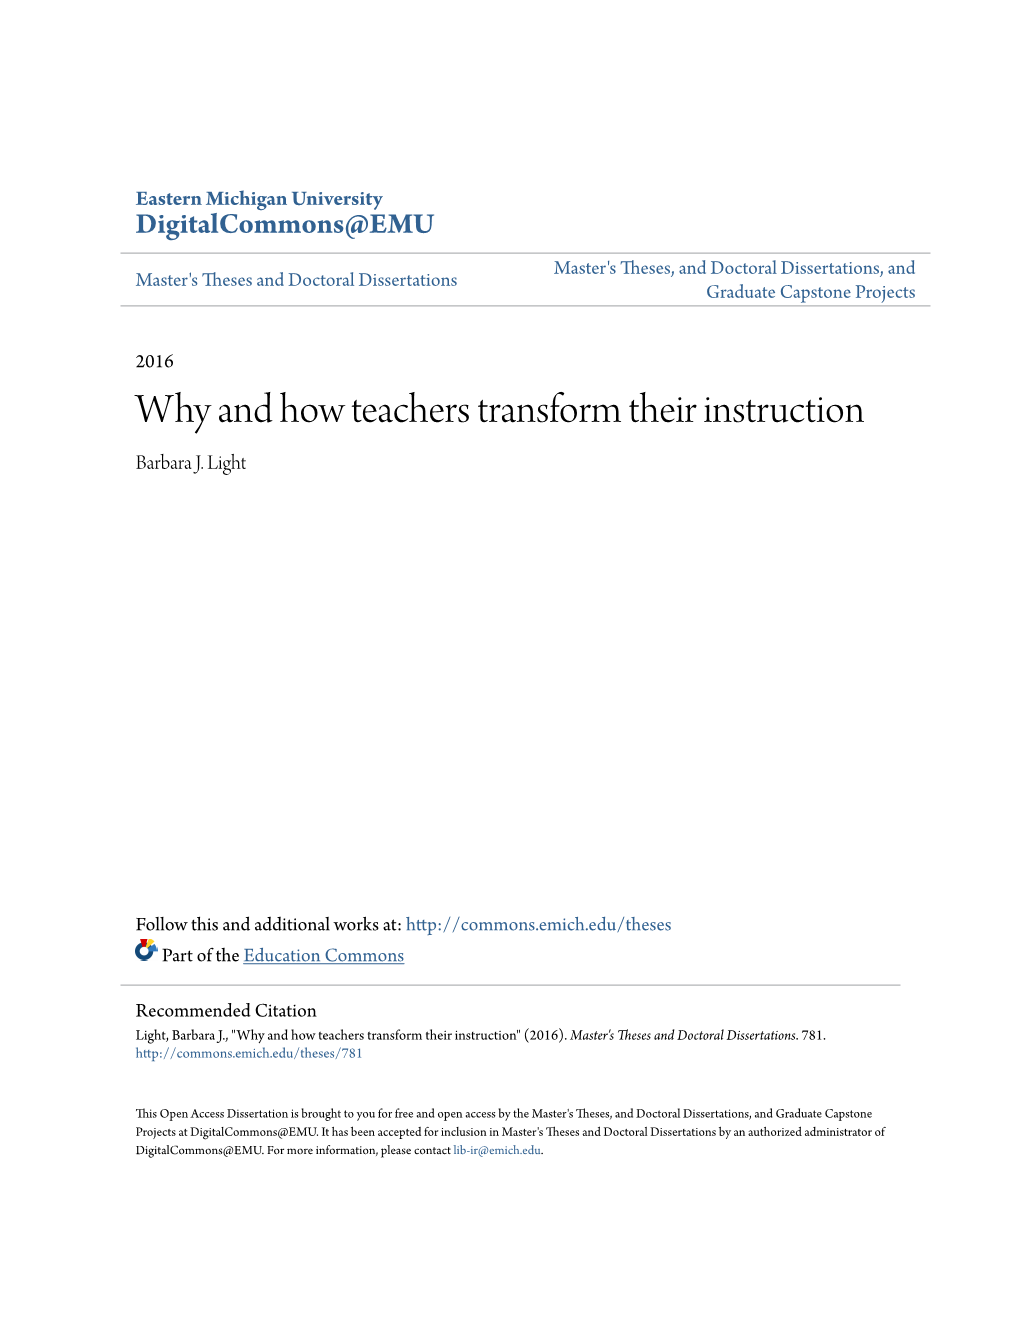 Why and How Teachers Transform Their Instruction Barbara J